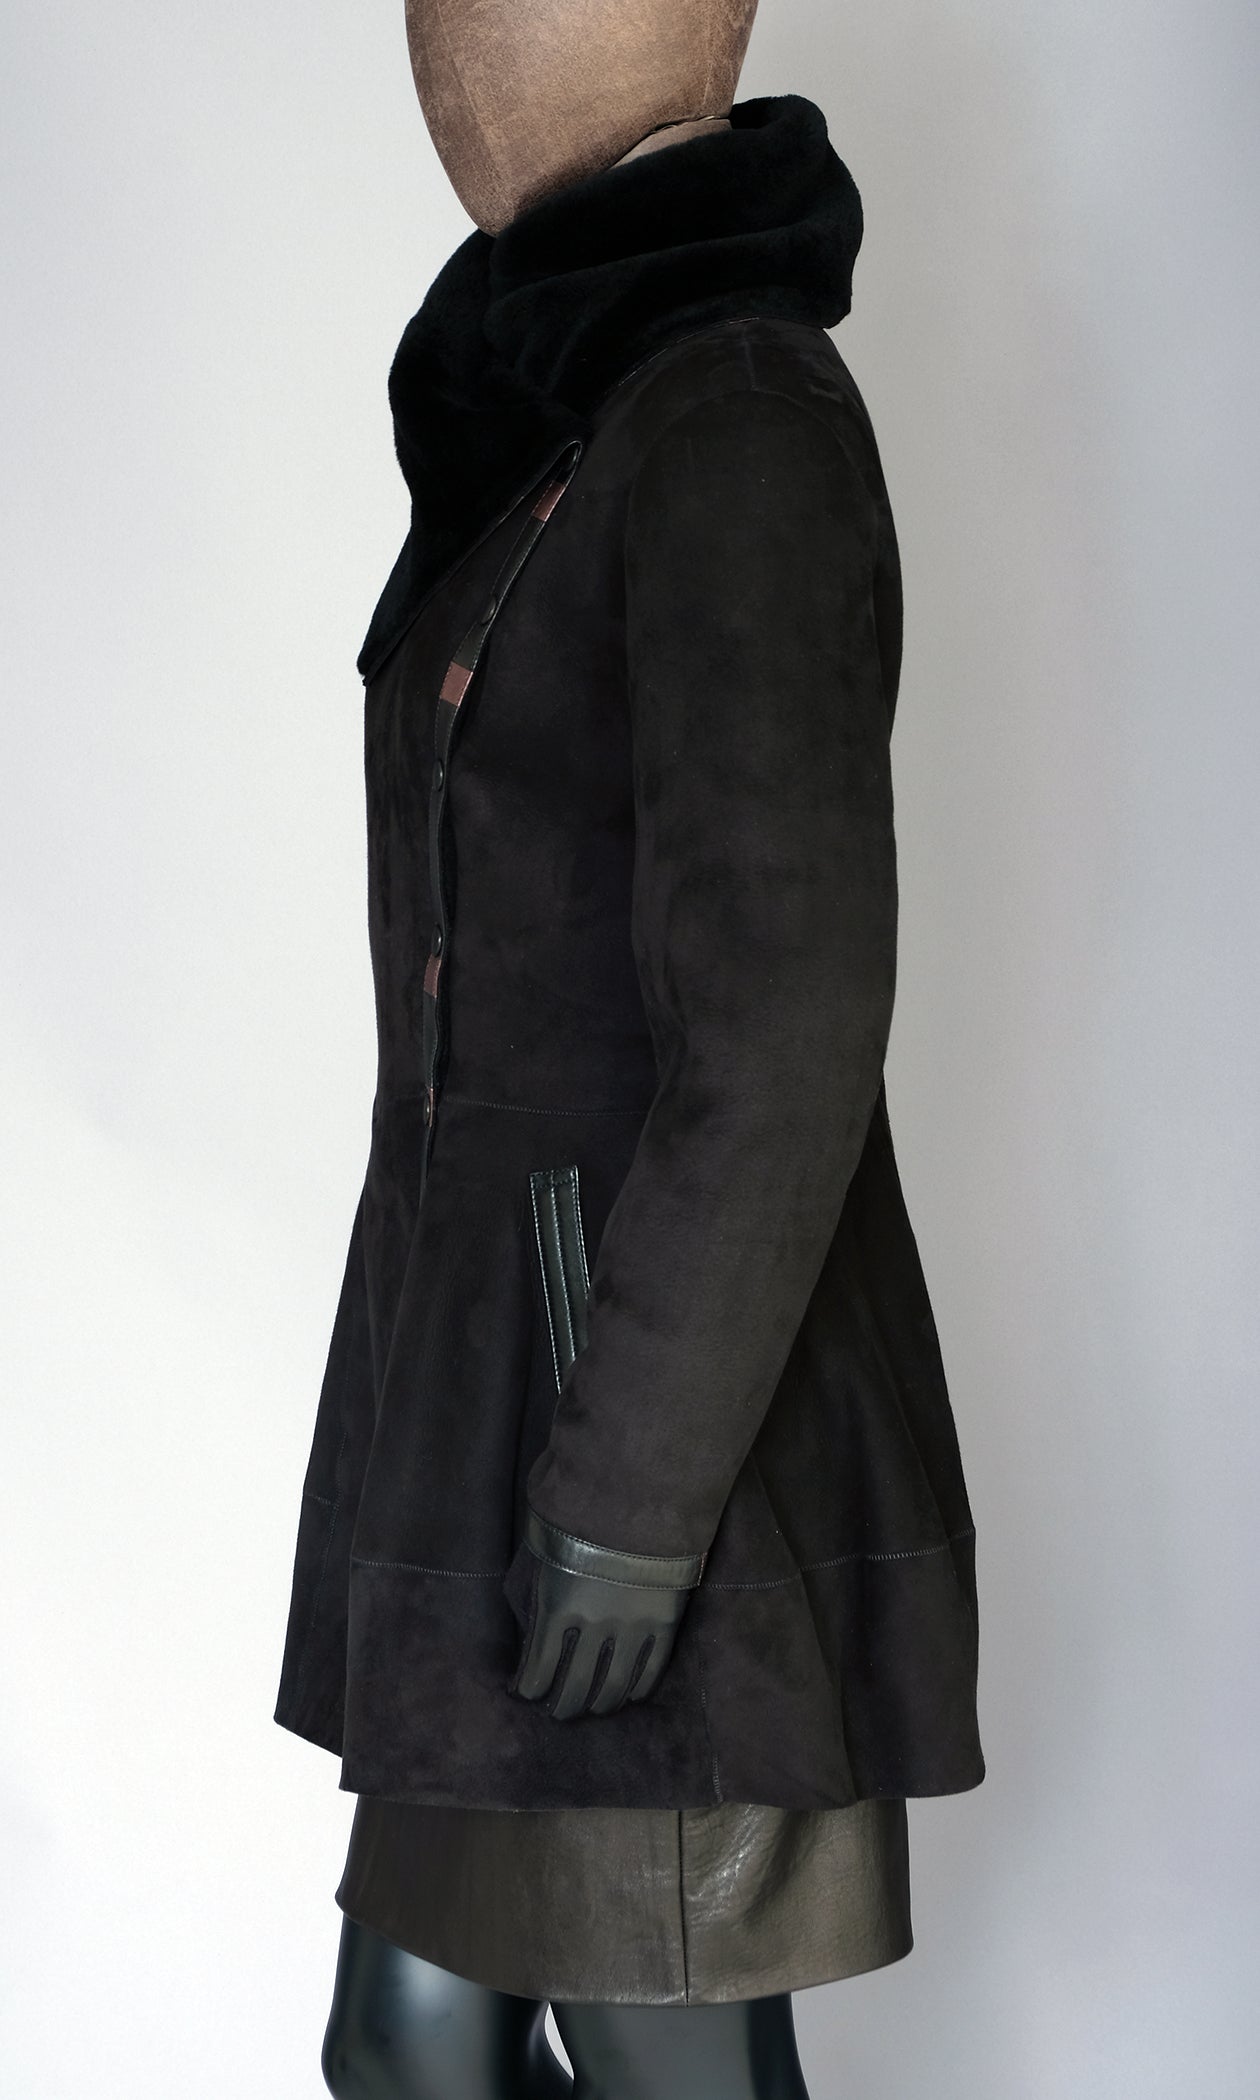 black suede merino shearling peplum jacket size medium 10